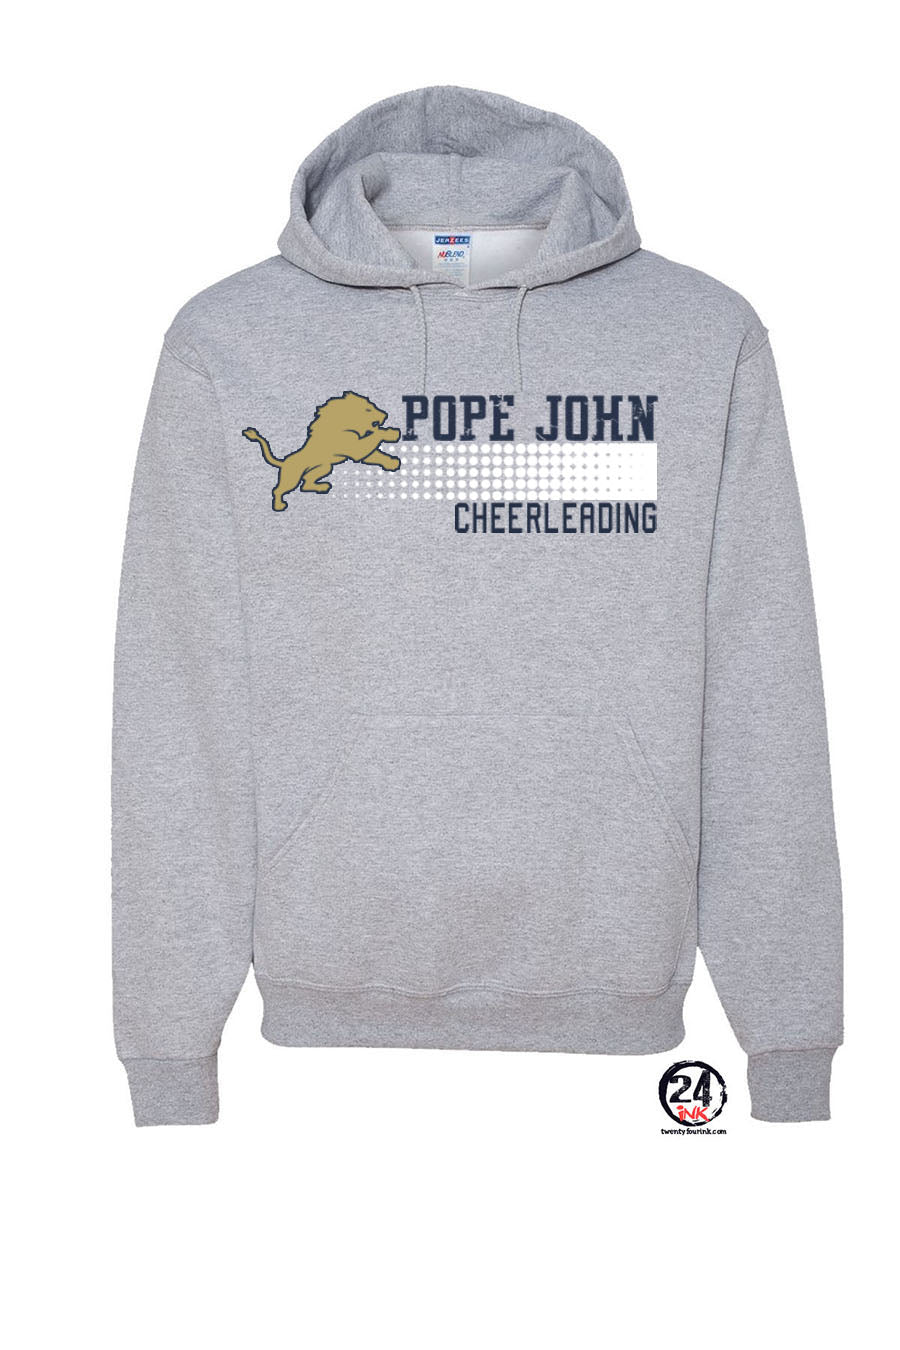 Pope John Cheer Design 4 Hooded Sweatshirt